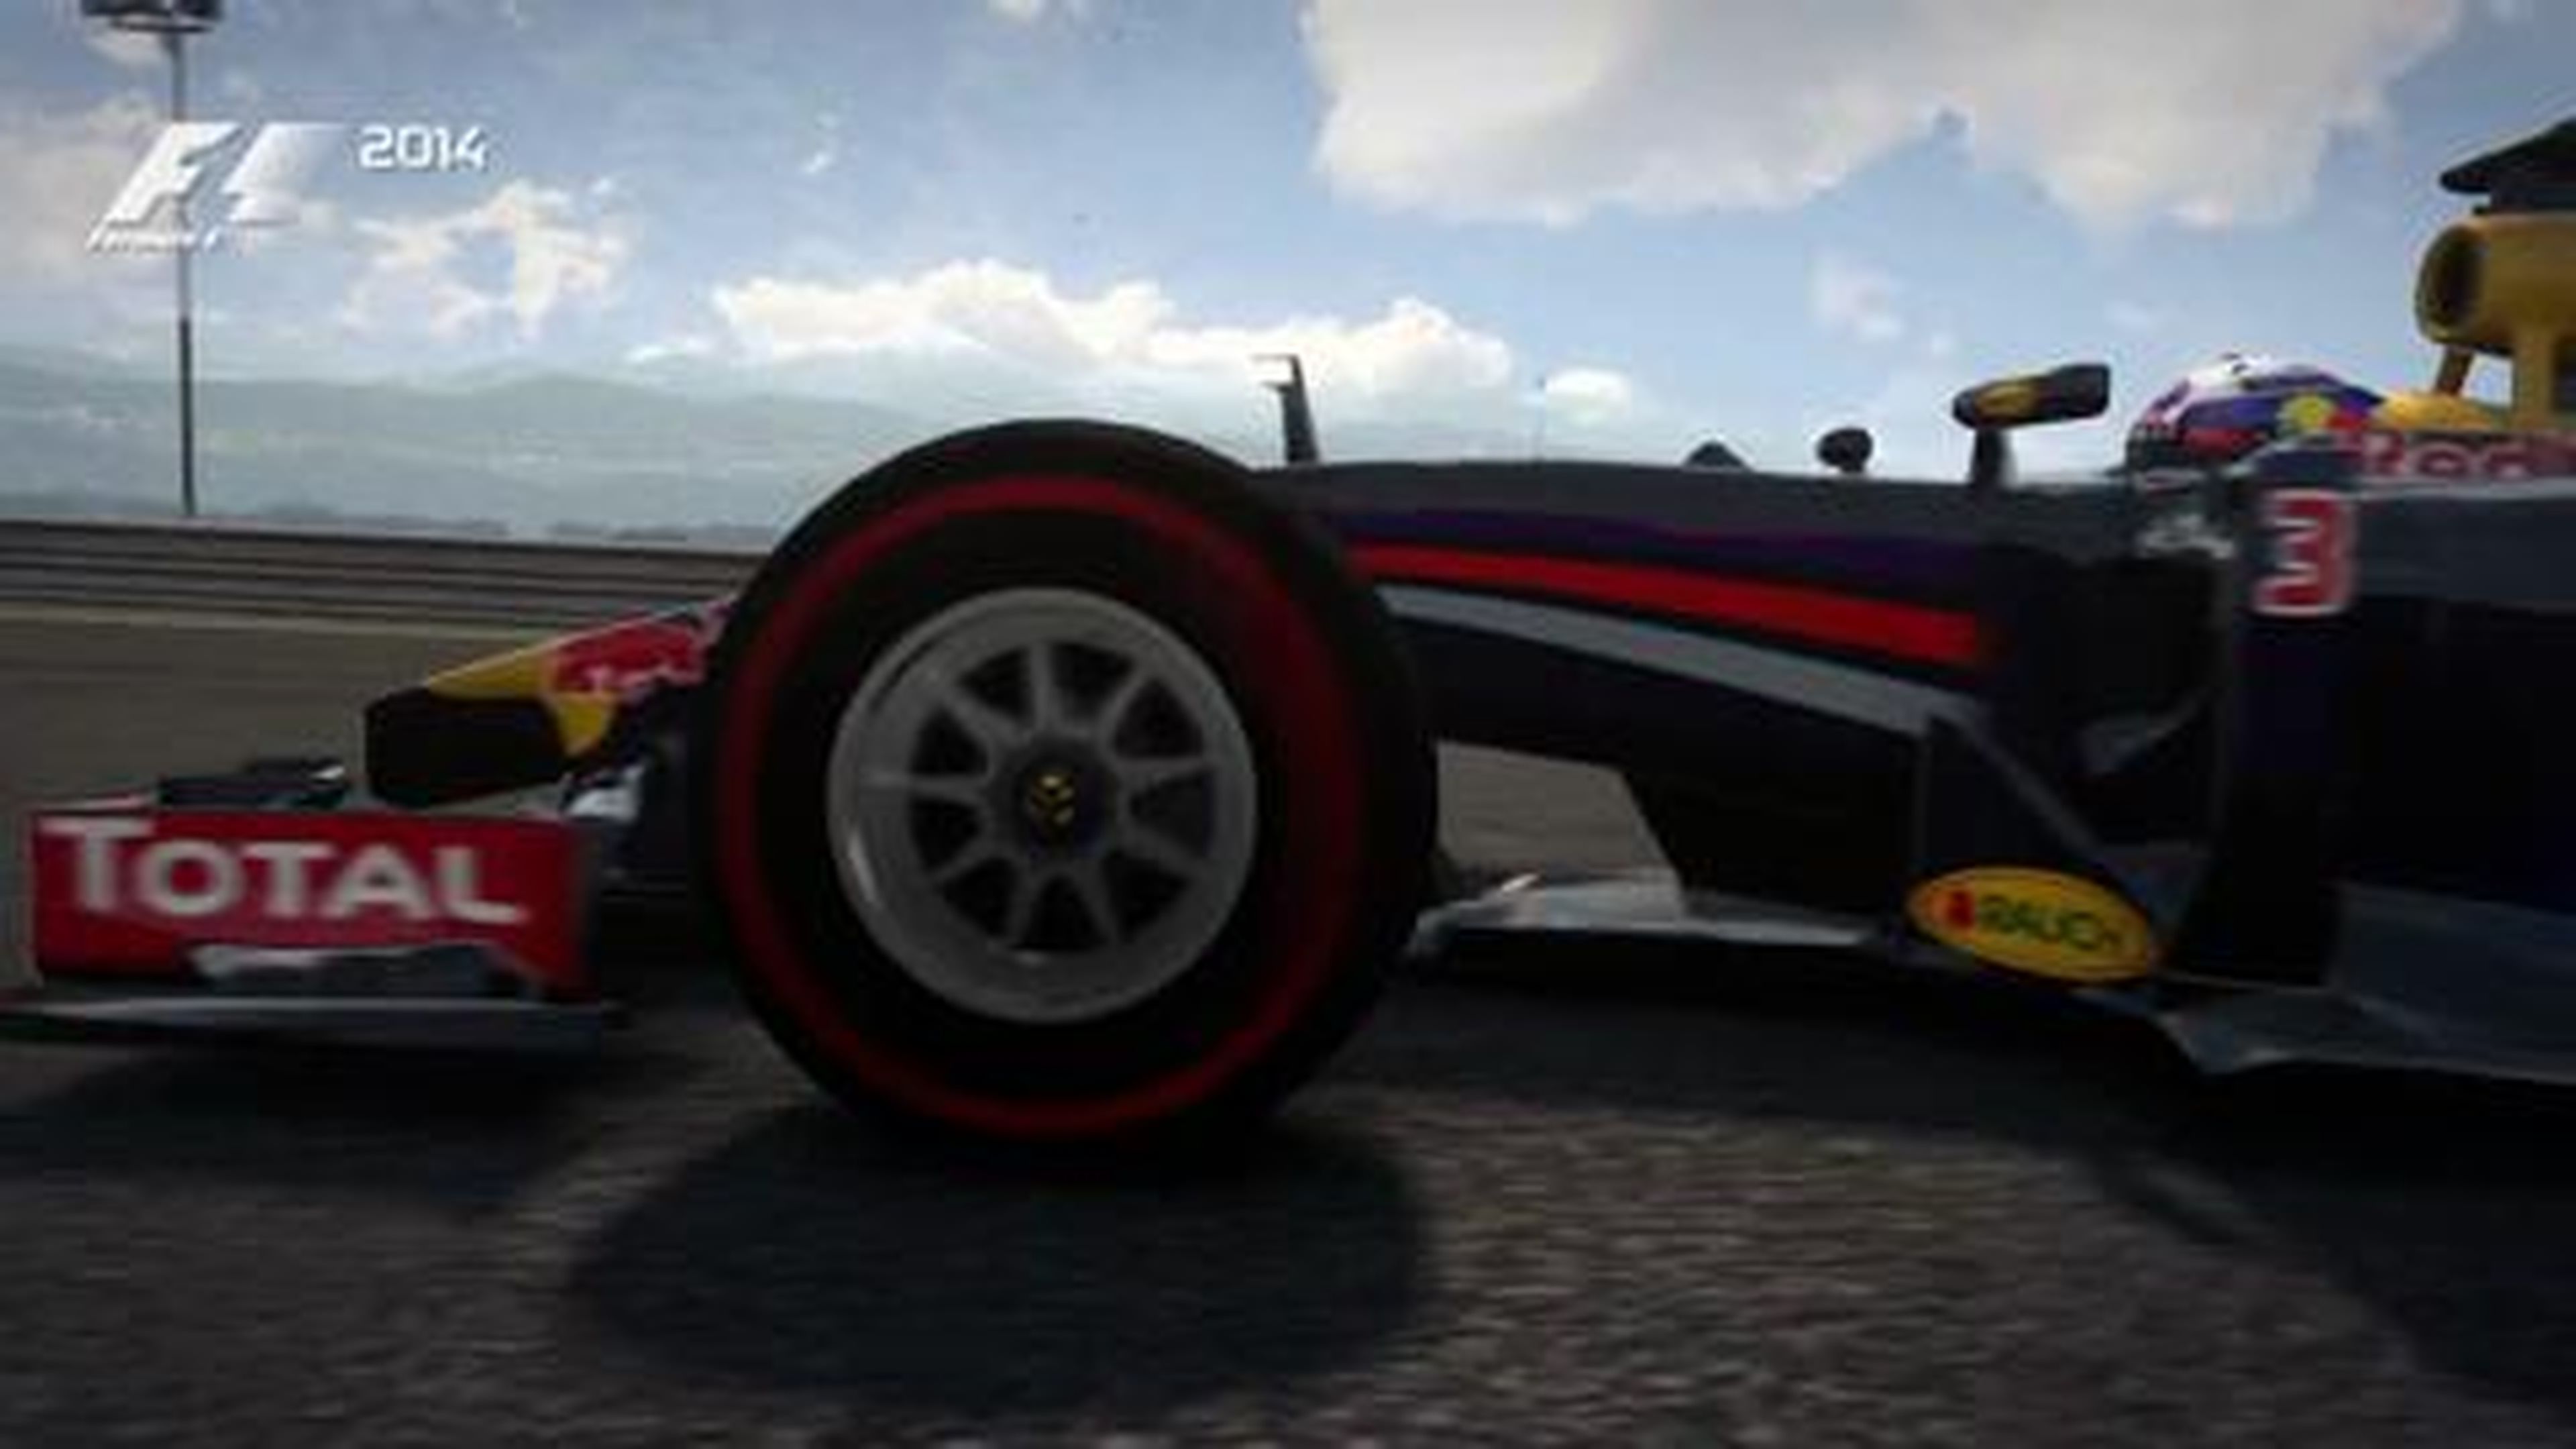 [SP] F1 2014- Austrian Red Bull Ring Hot Lap